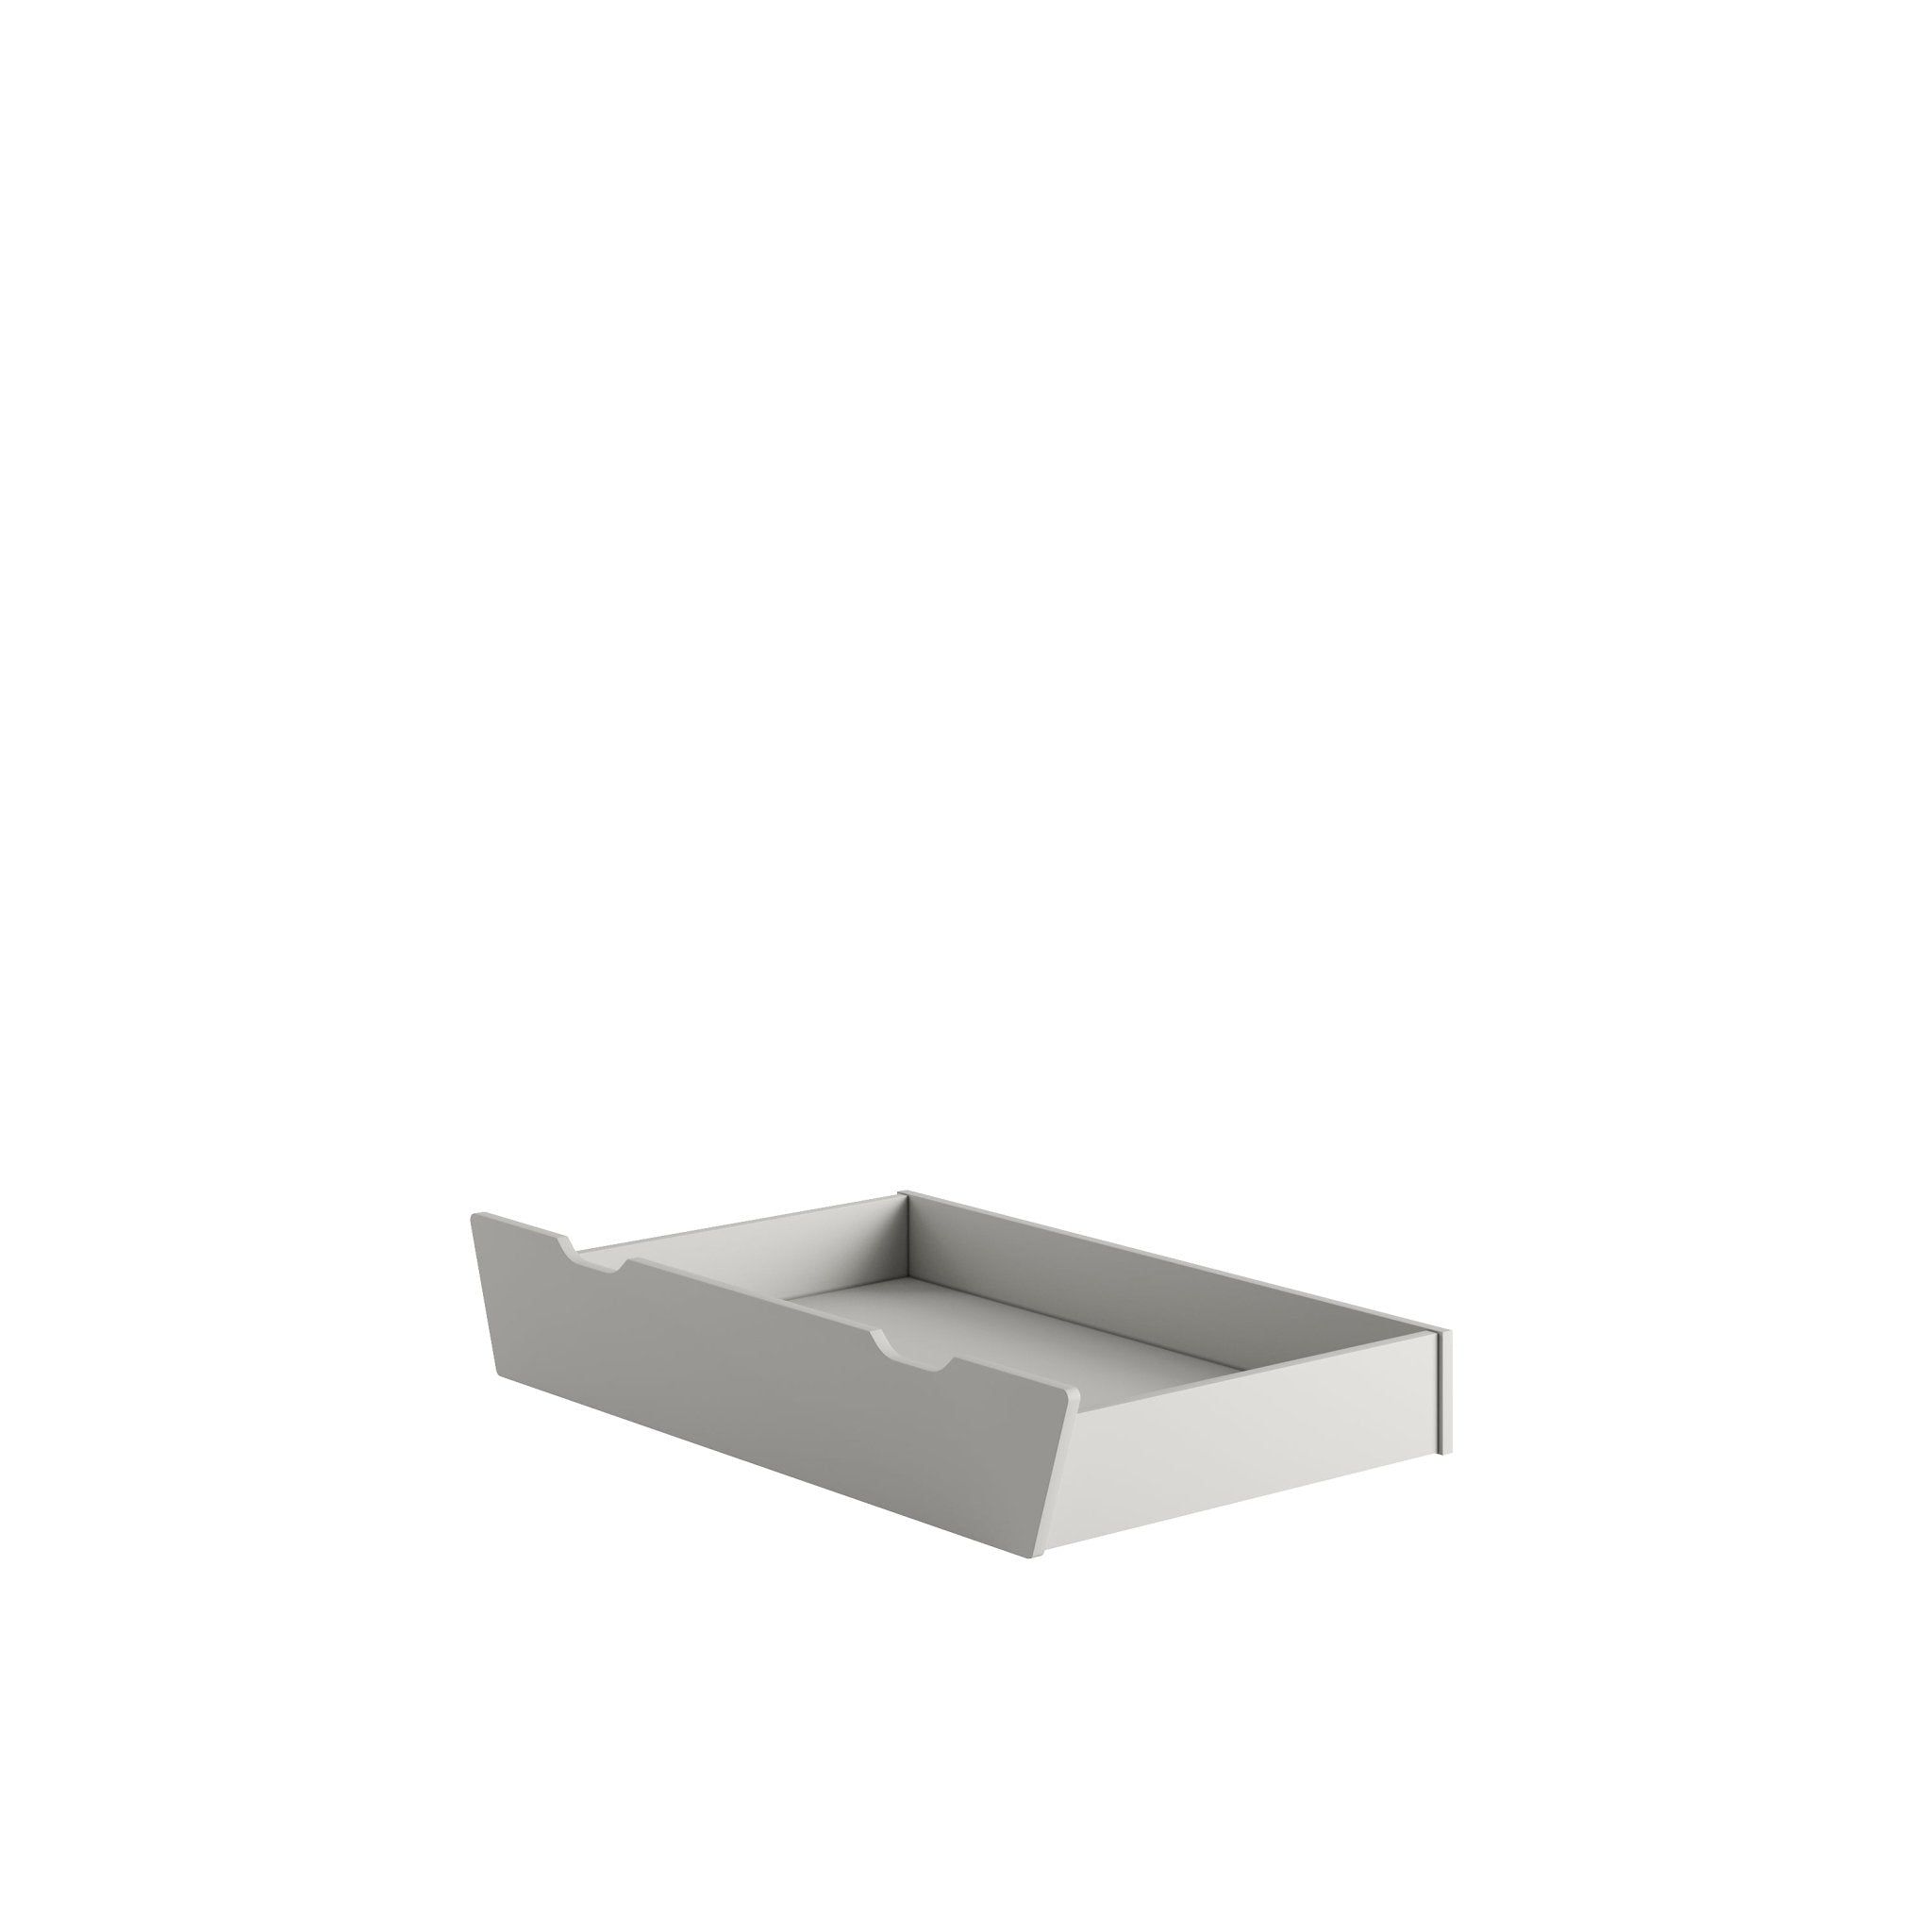 Saga under Bed/Cot drawer, 140 x 70 cm Grey color - Scandinavian Stories by Marton